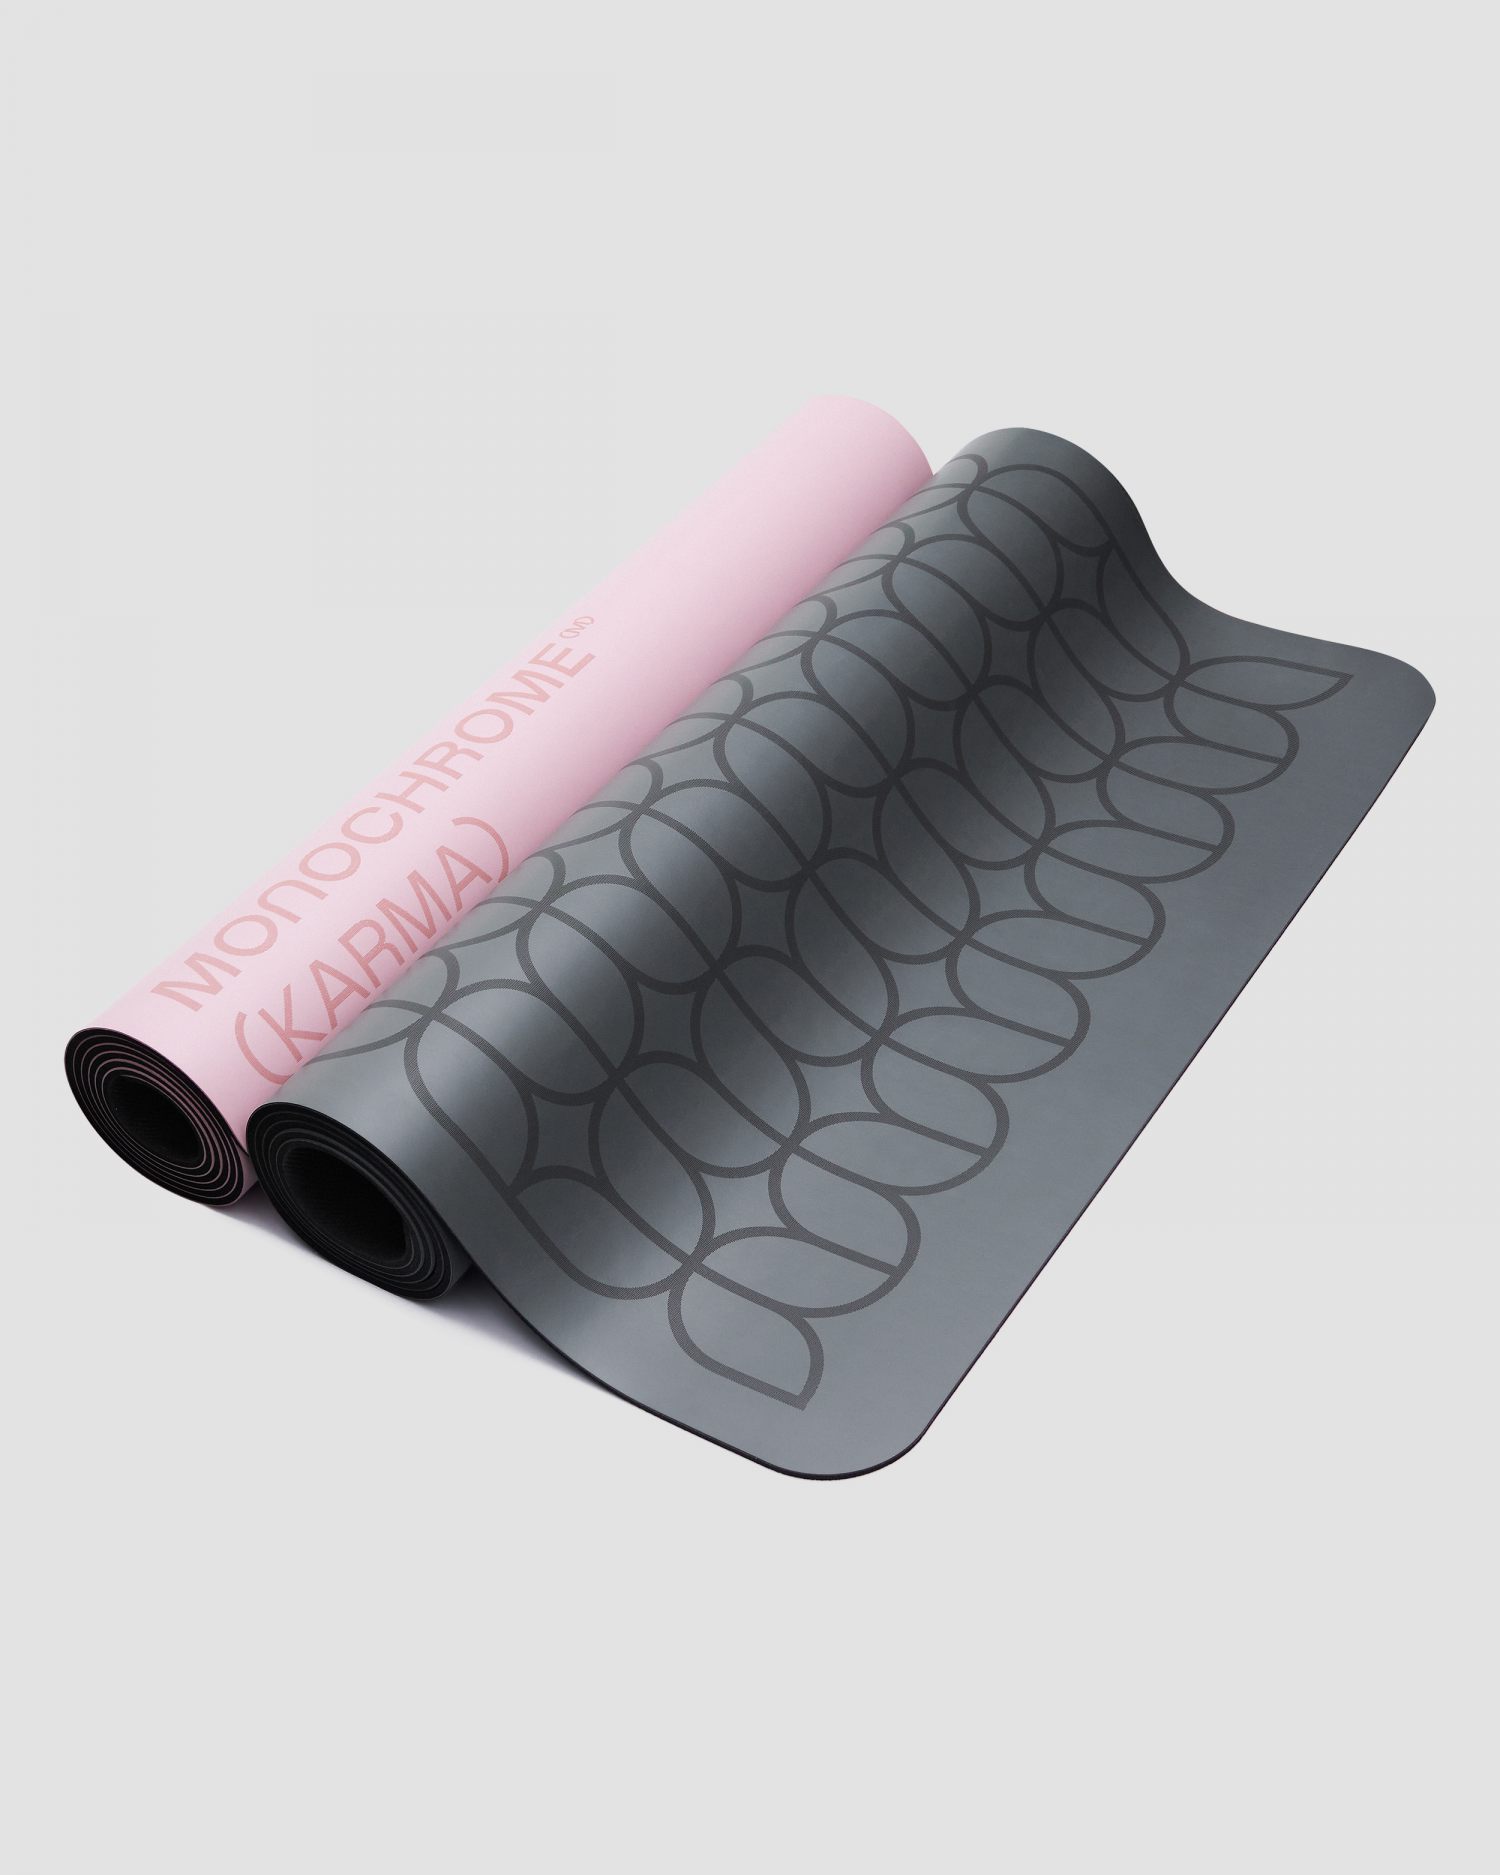 Organic Stripes - Minimalist Textured Line Pattern in Black and Almond  Cream Yoga Mat